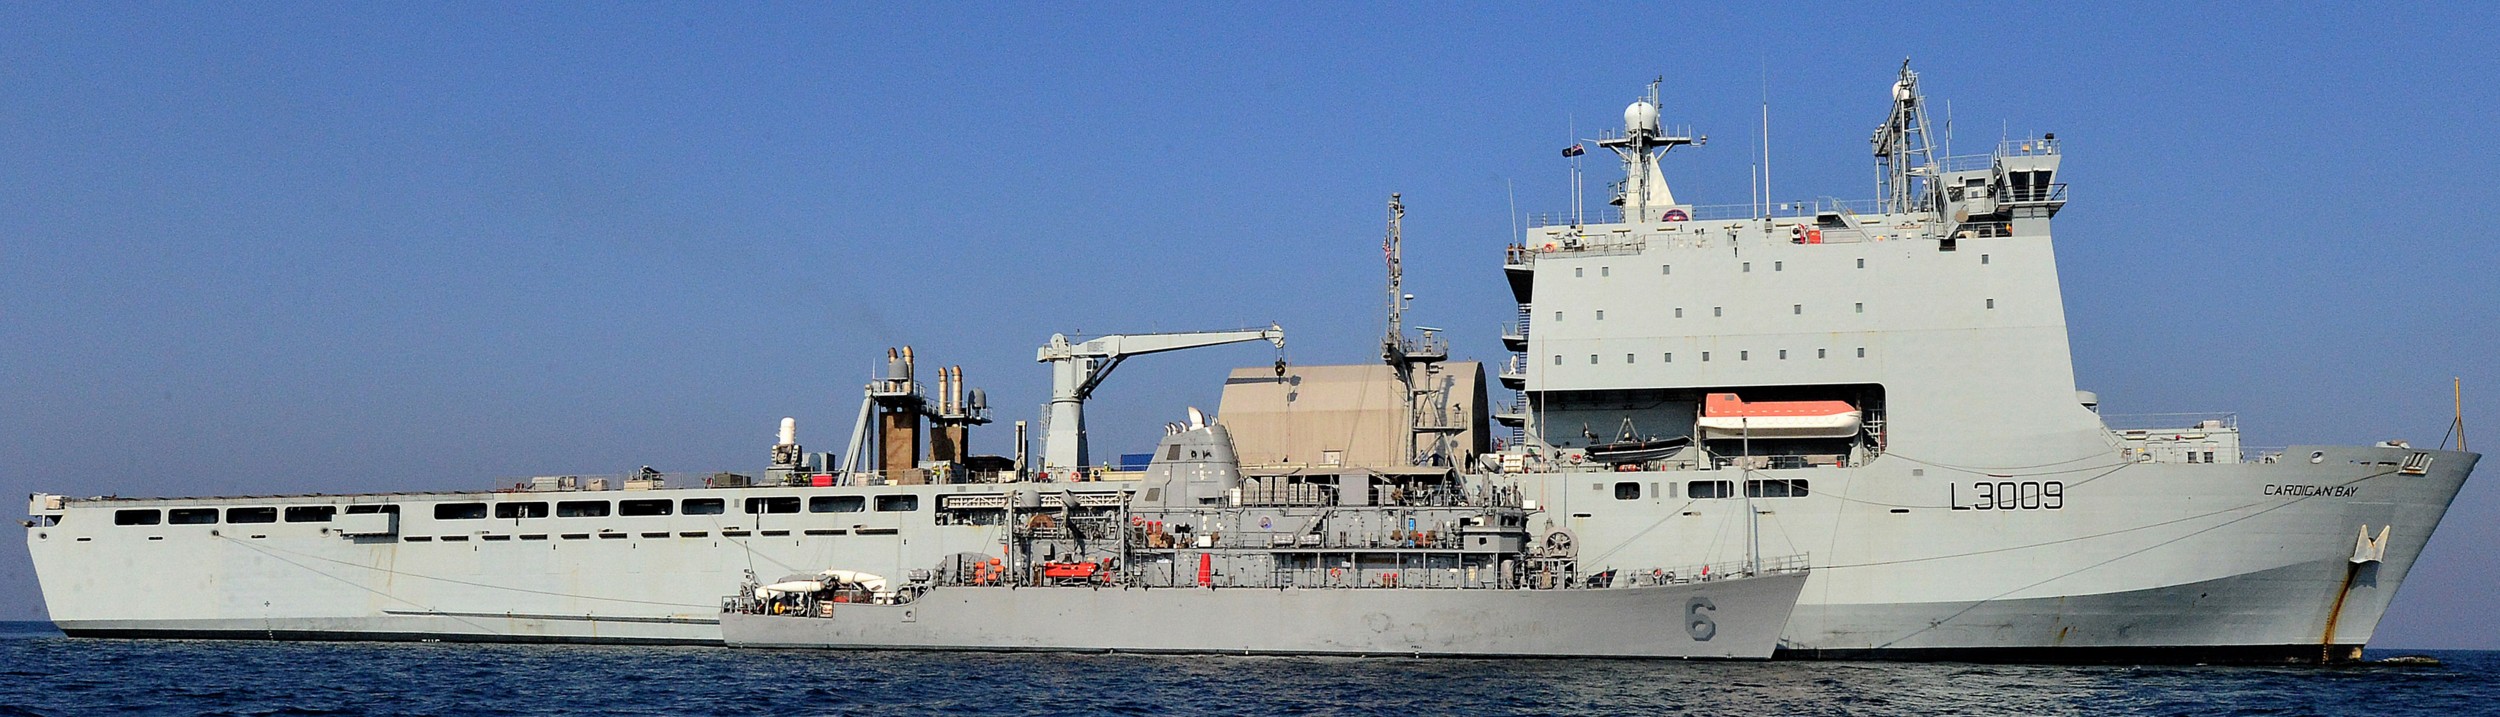 l-3009 rfa cardigan bay dock landing ship lsd royal fleet auxilary navy 27